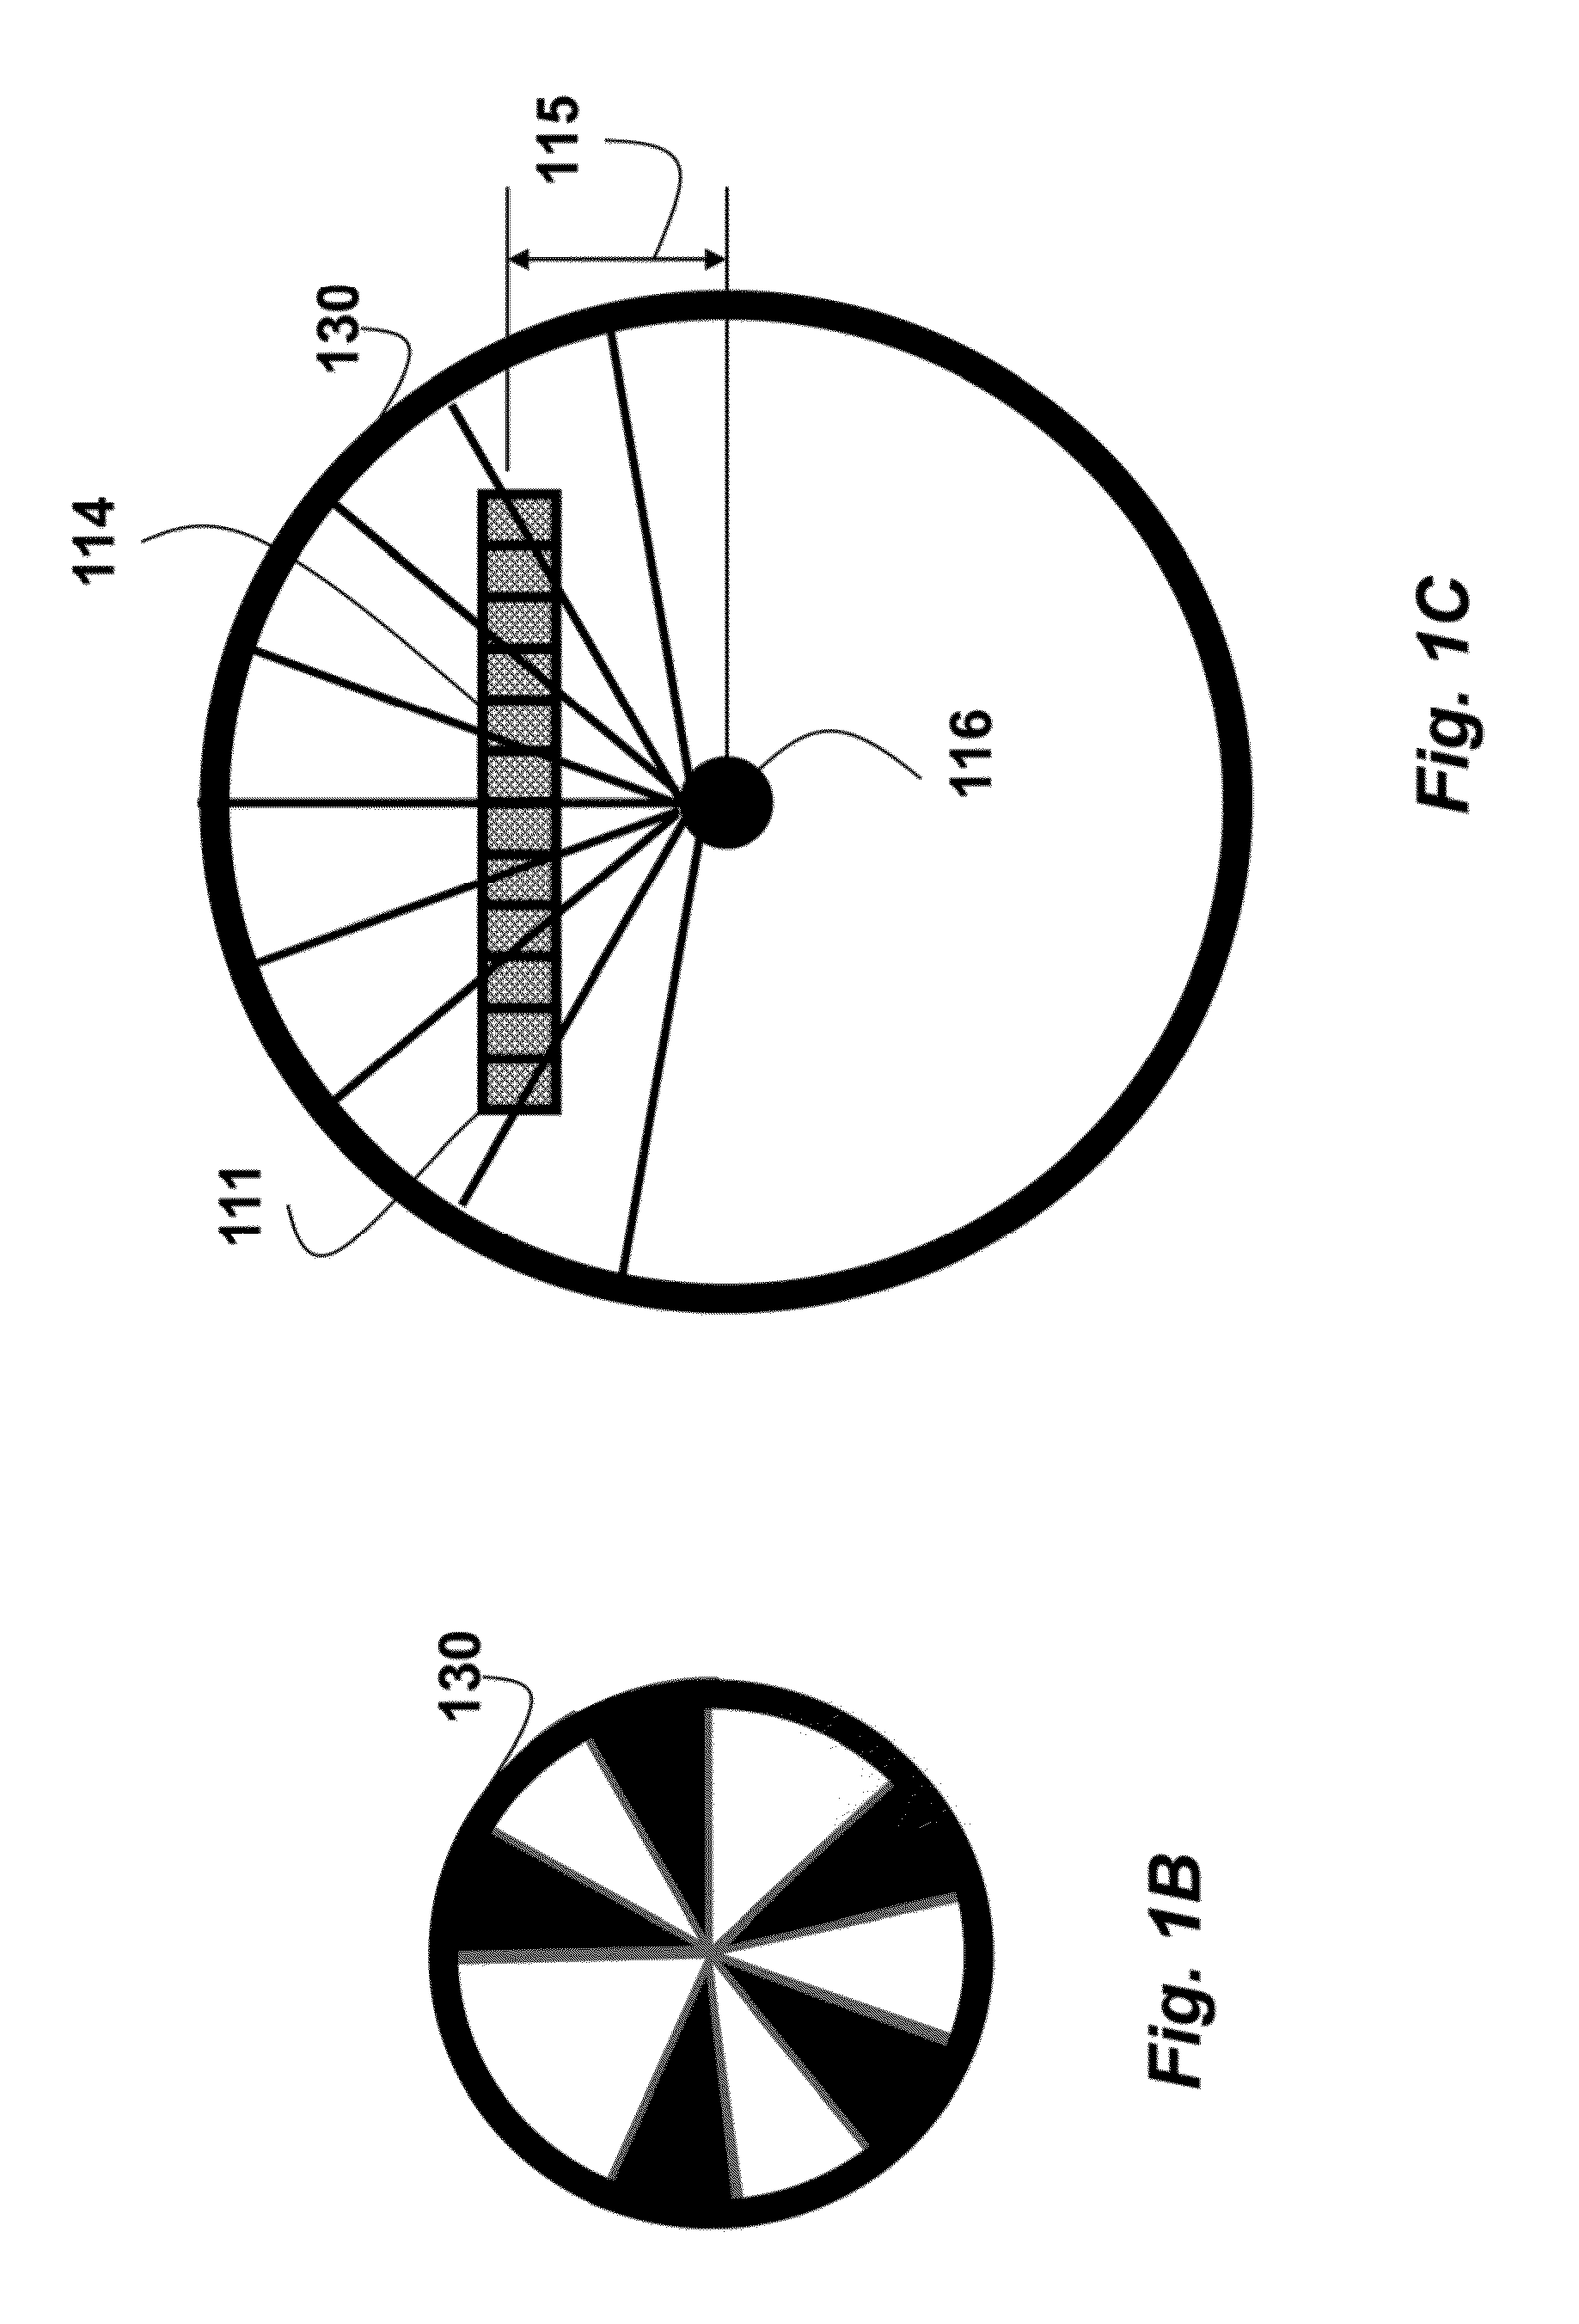 Self-calibrating single track absolute rotary encoder